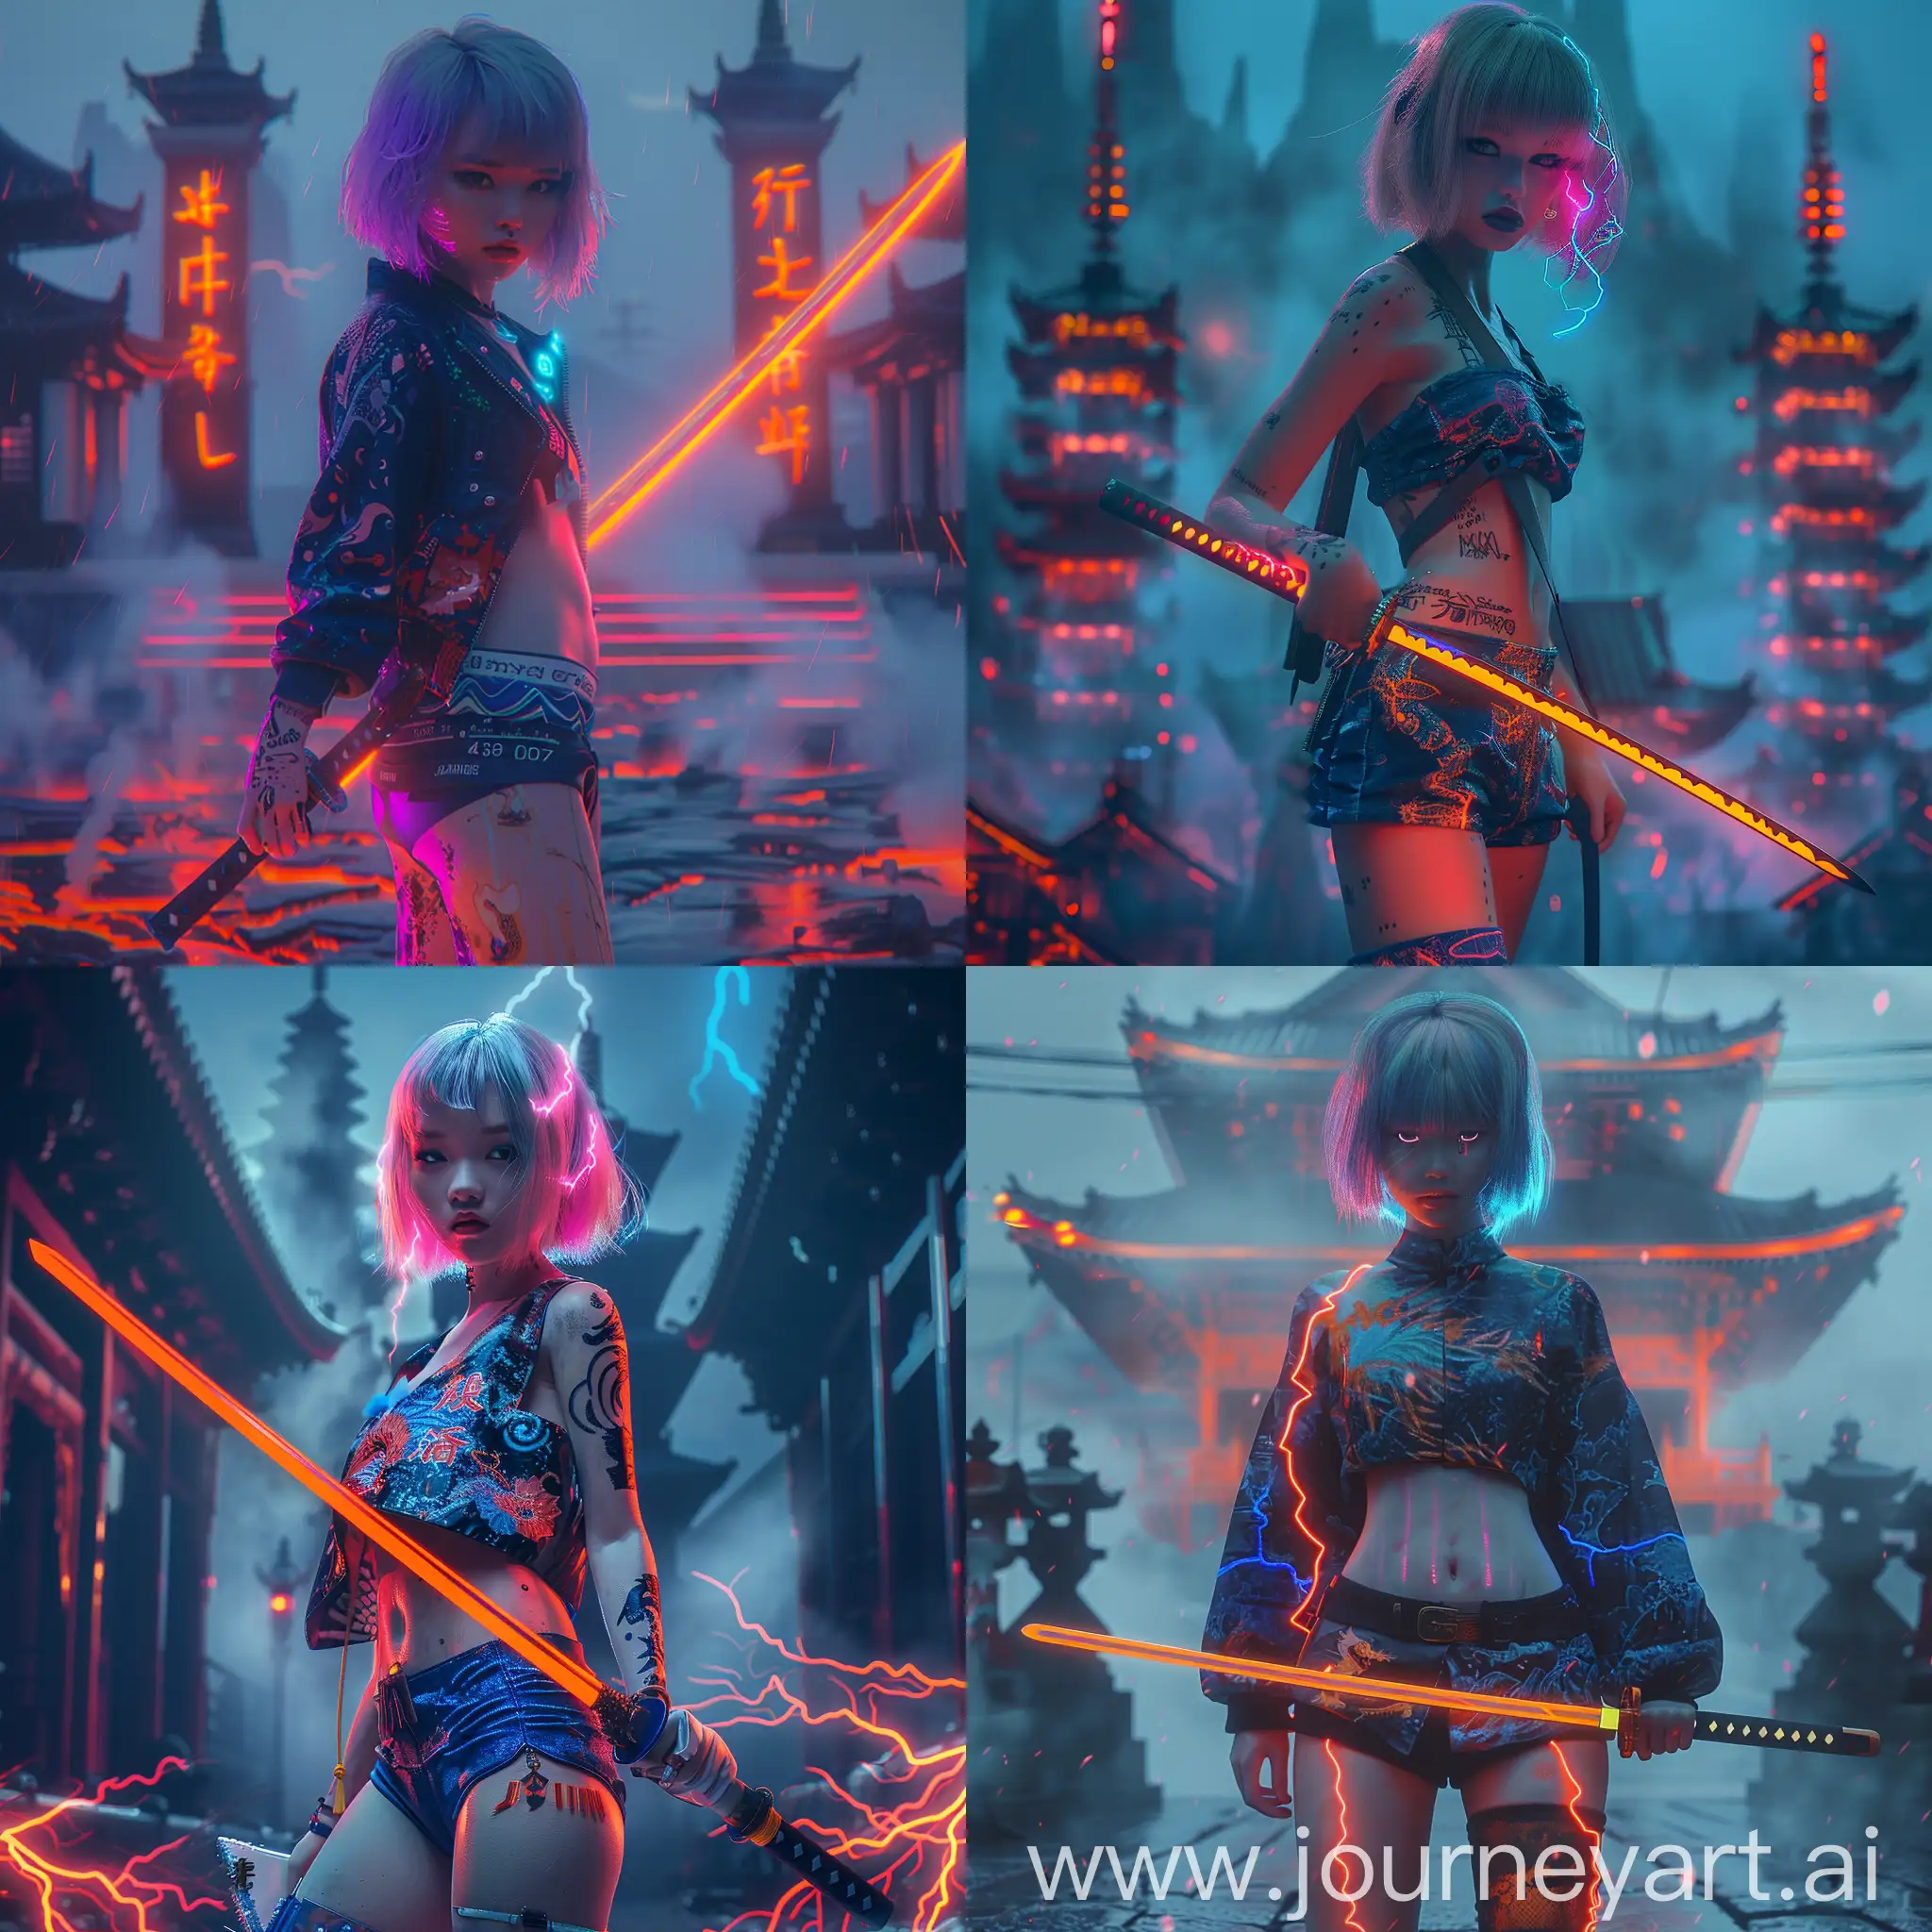 Futuristic-Japanese-Warrior-Girl-with-Neon-Sword-in-Dark-Temple